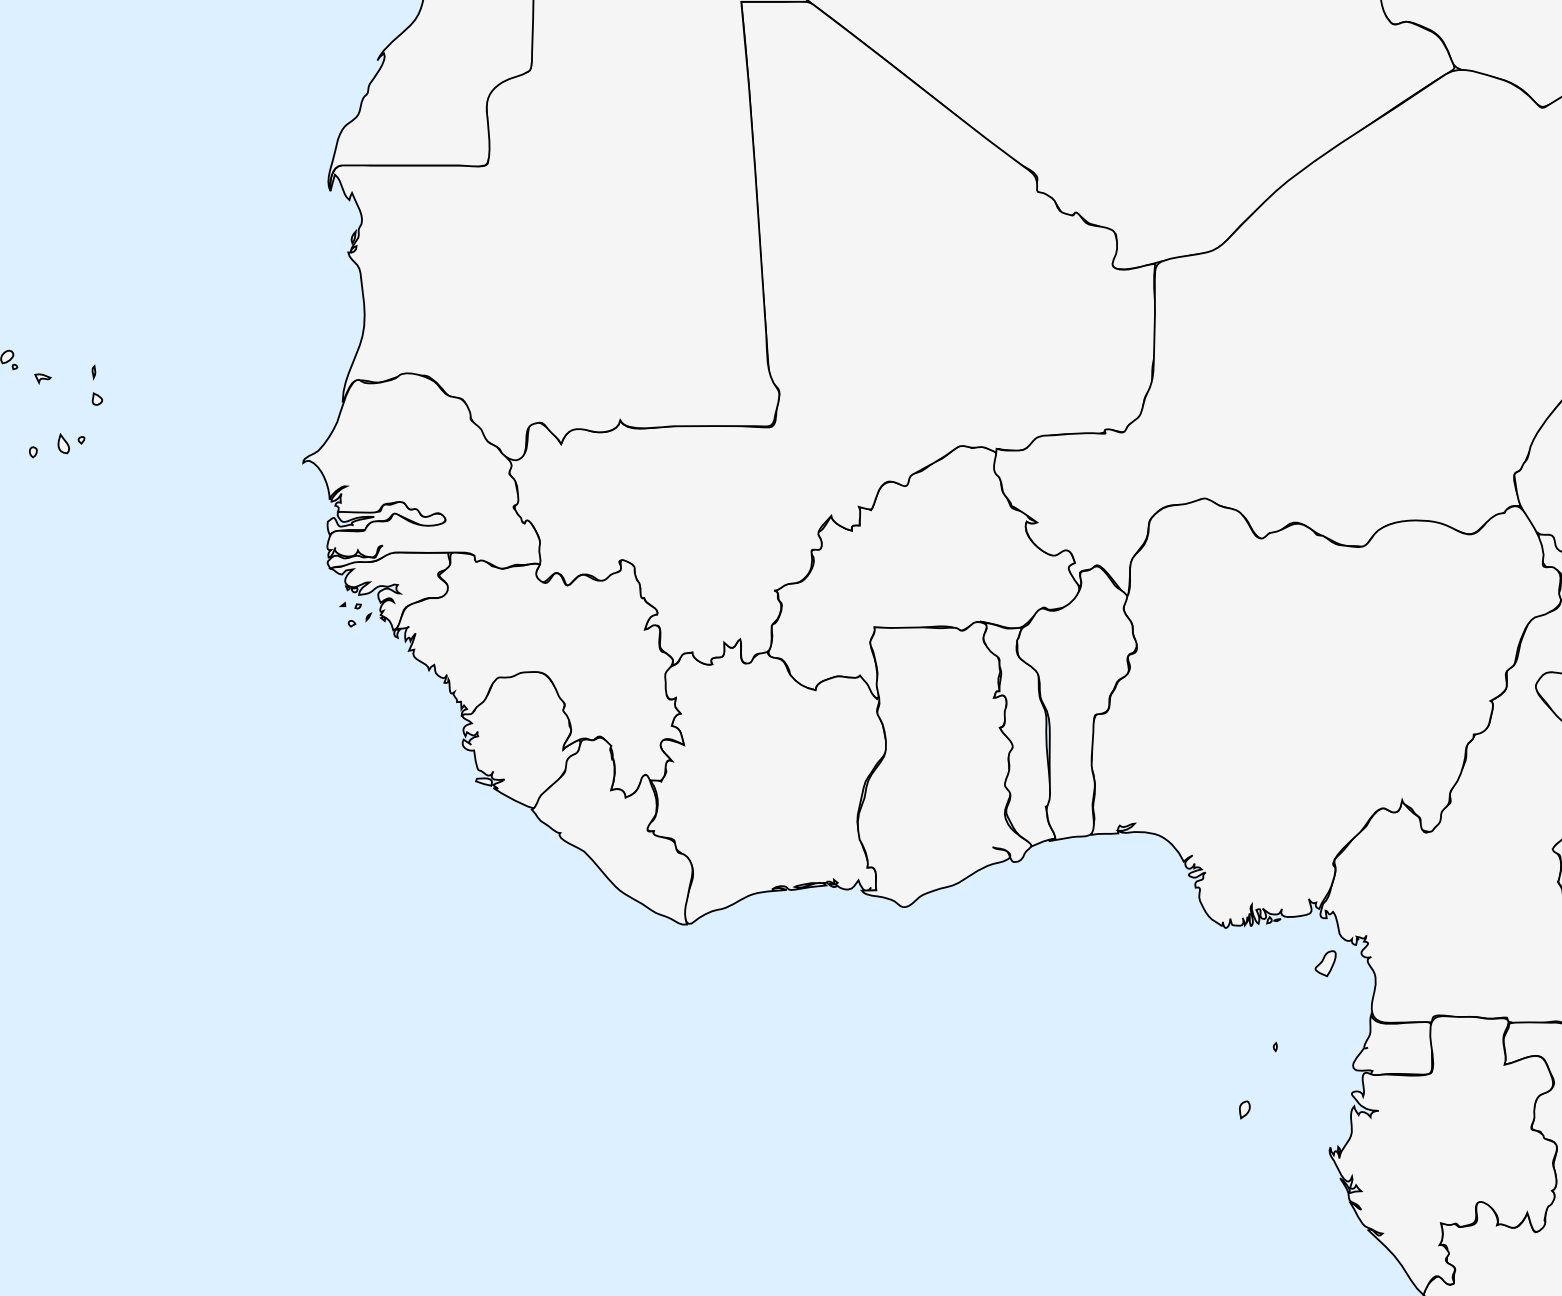 blank_map_directory:blank_map_directory_africa [alternatehistory.com wiki]